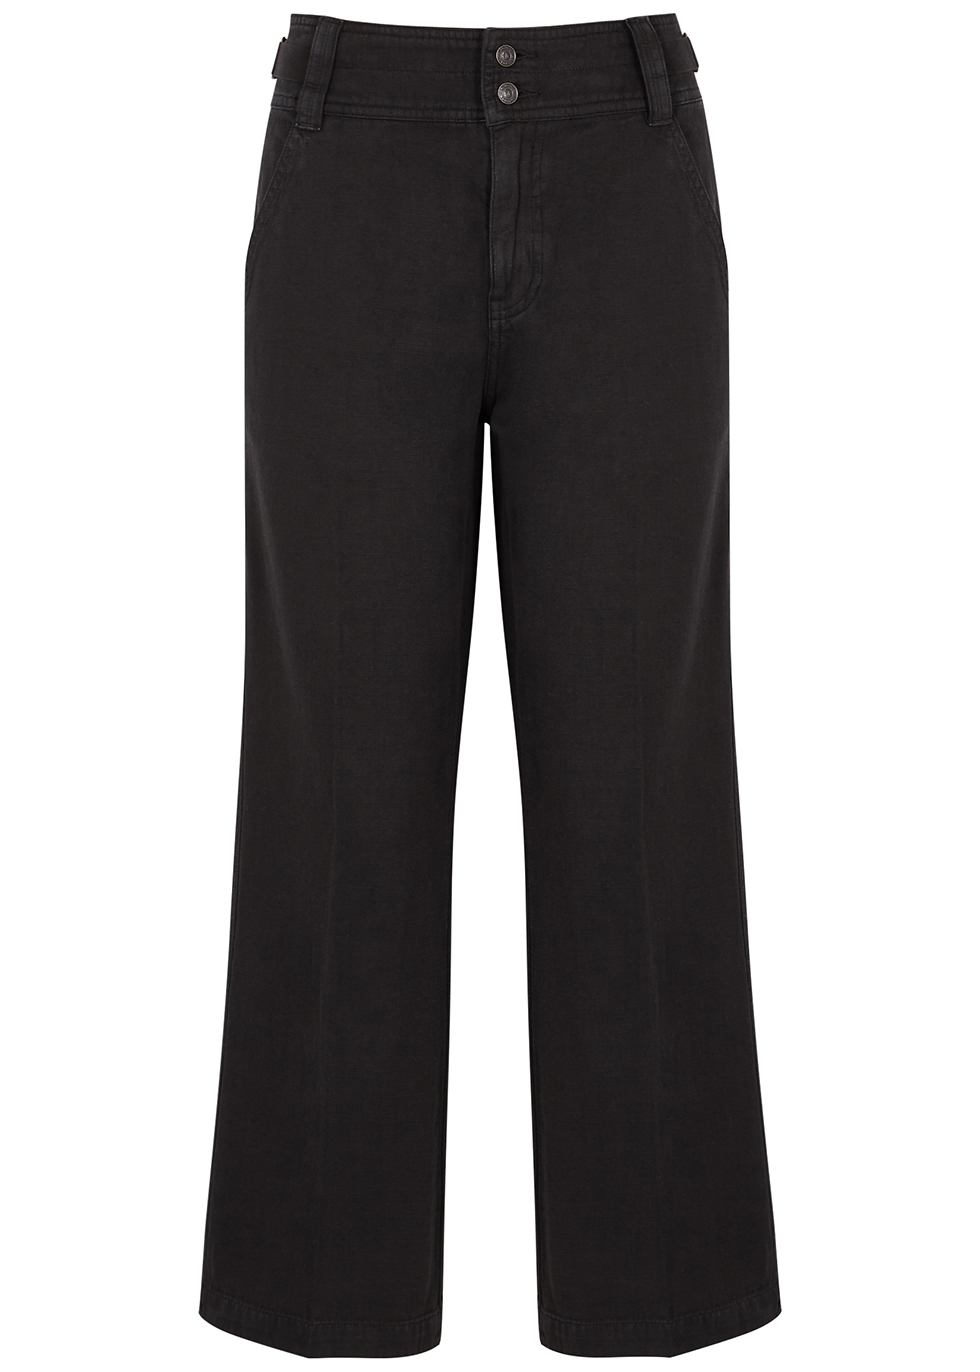 Current/Elliott The Relaxed black cotton-blend trousers - Harvey Nichols